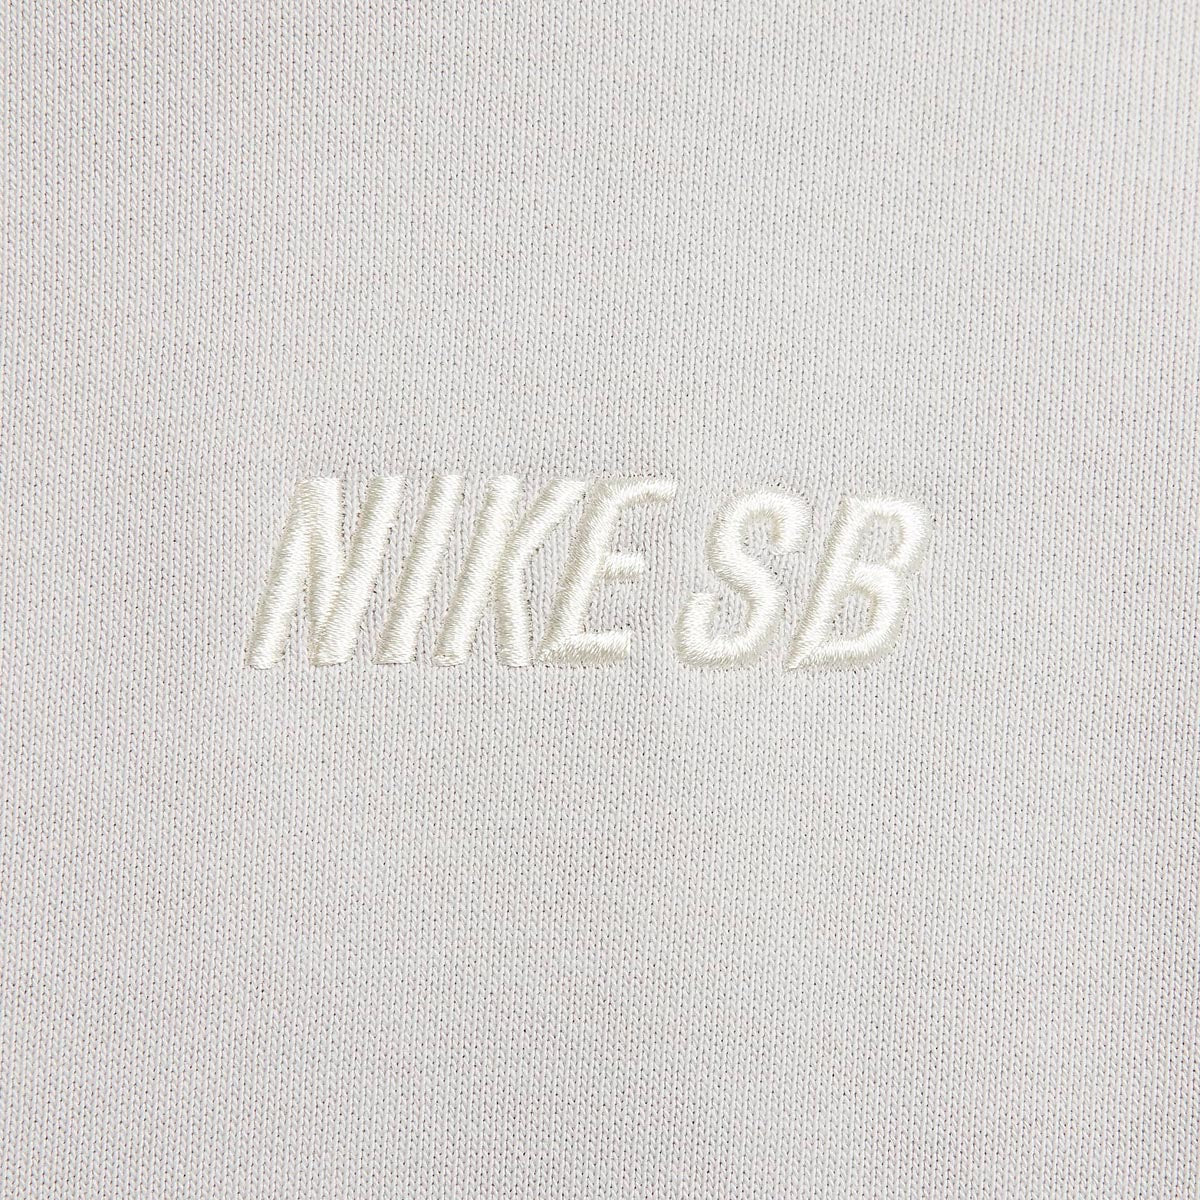 Nike SB Centered Logo Hoodie - Light Iron Ore/Coconut Milk image 4